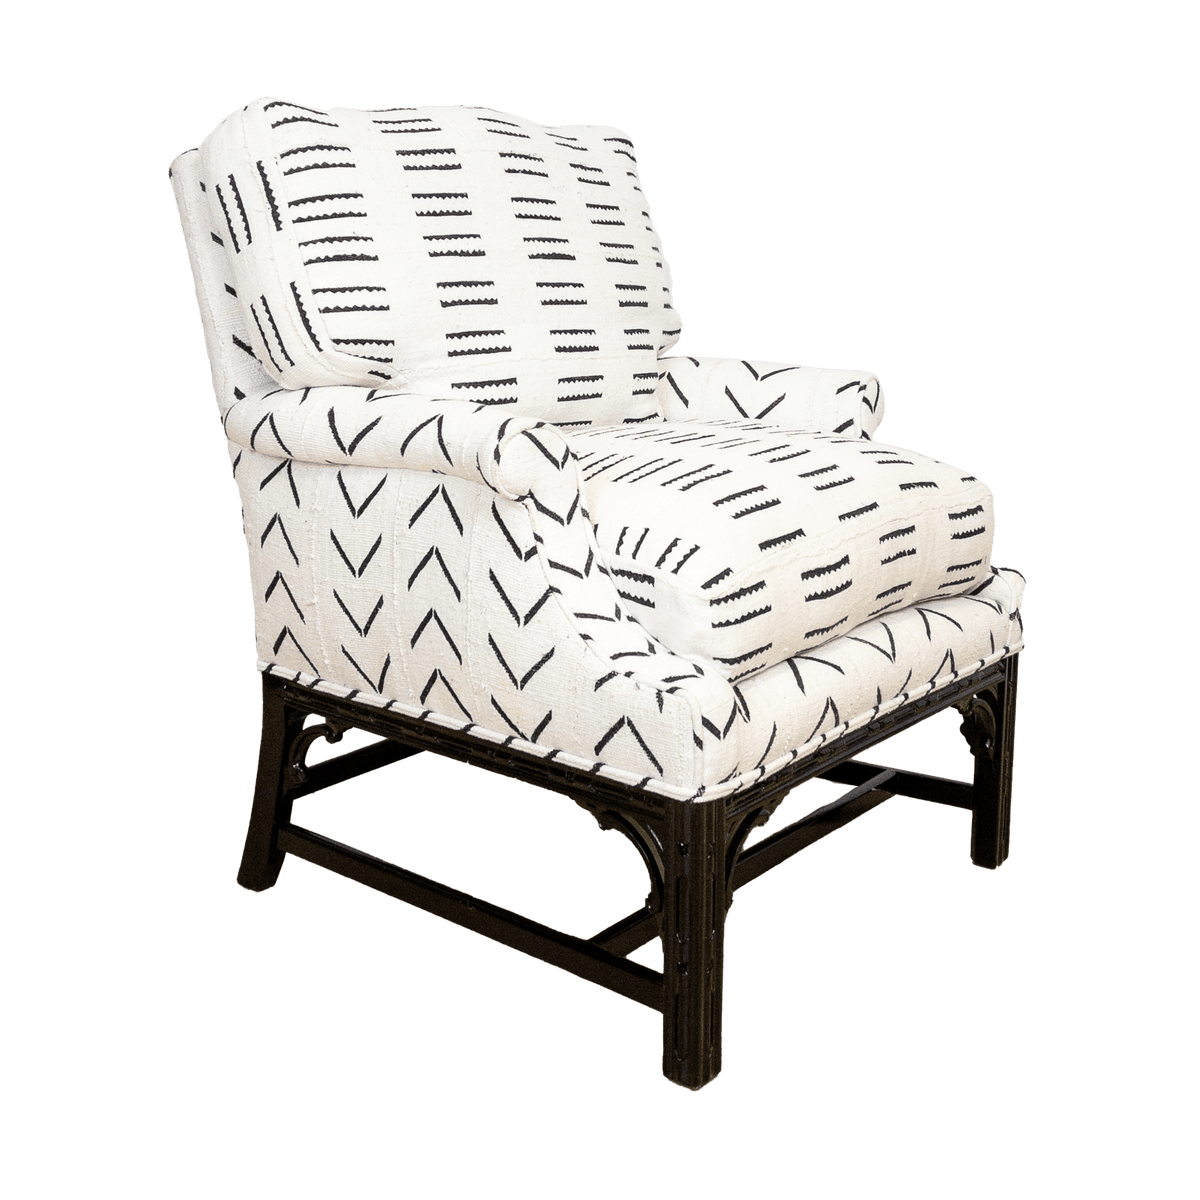 Kuba Chair